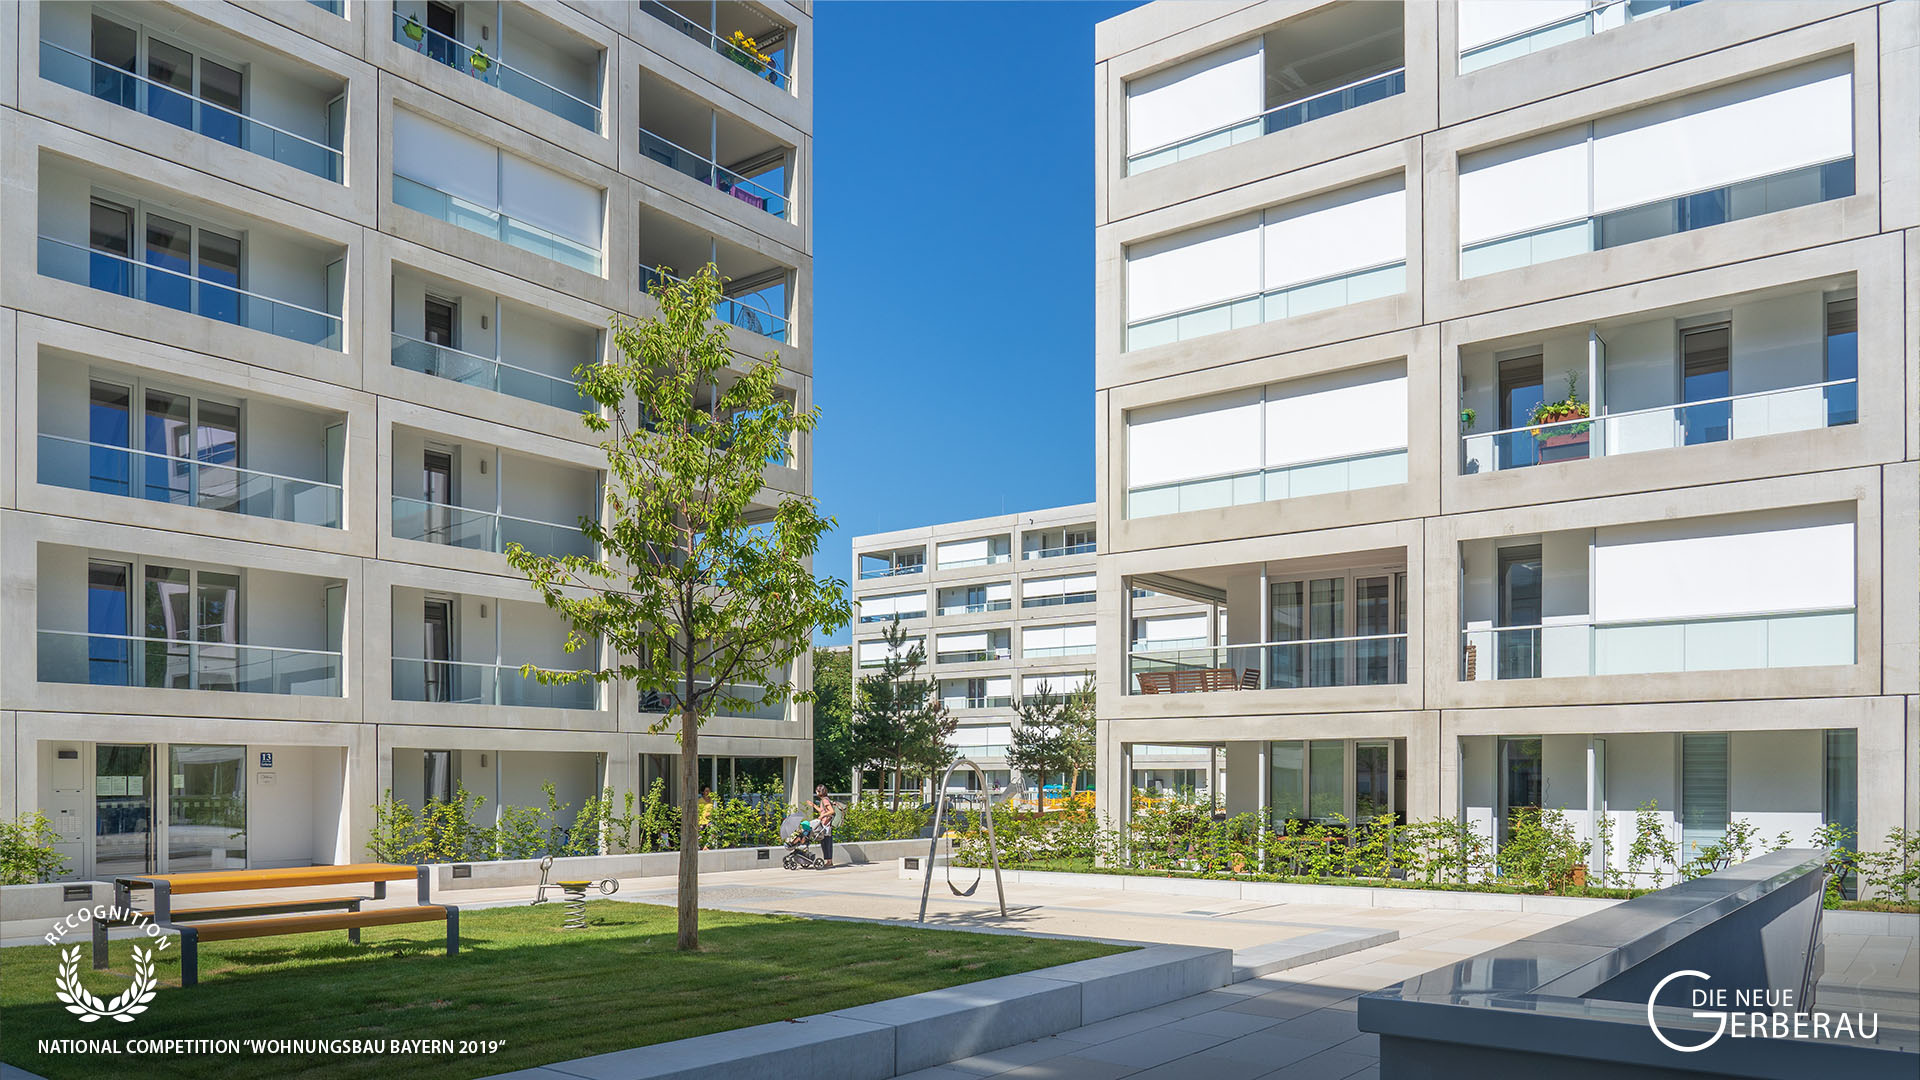 National Competition Wohnungsbau Bayern 2019: 'Die neue Gerberau' wins recognition